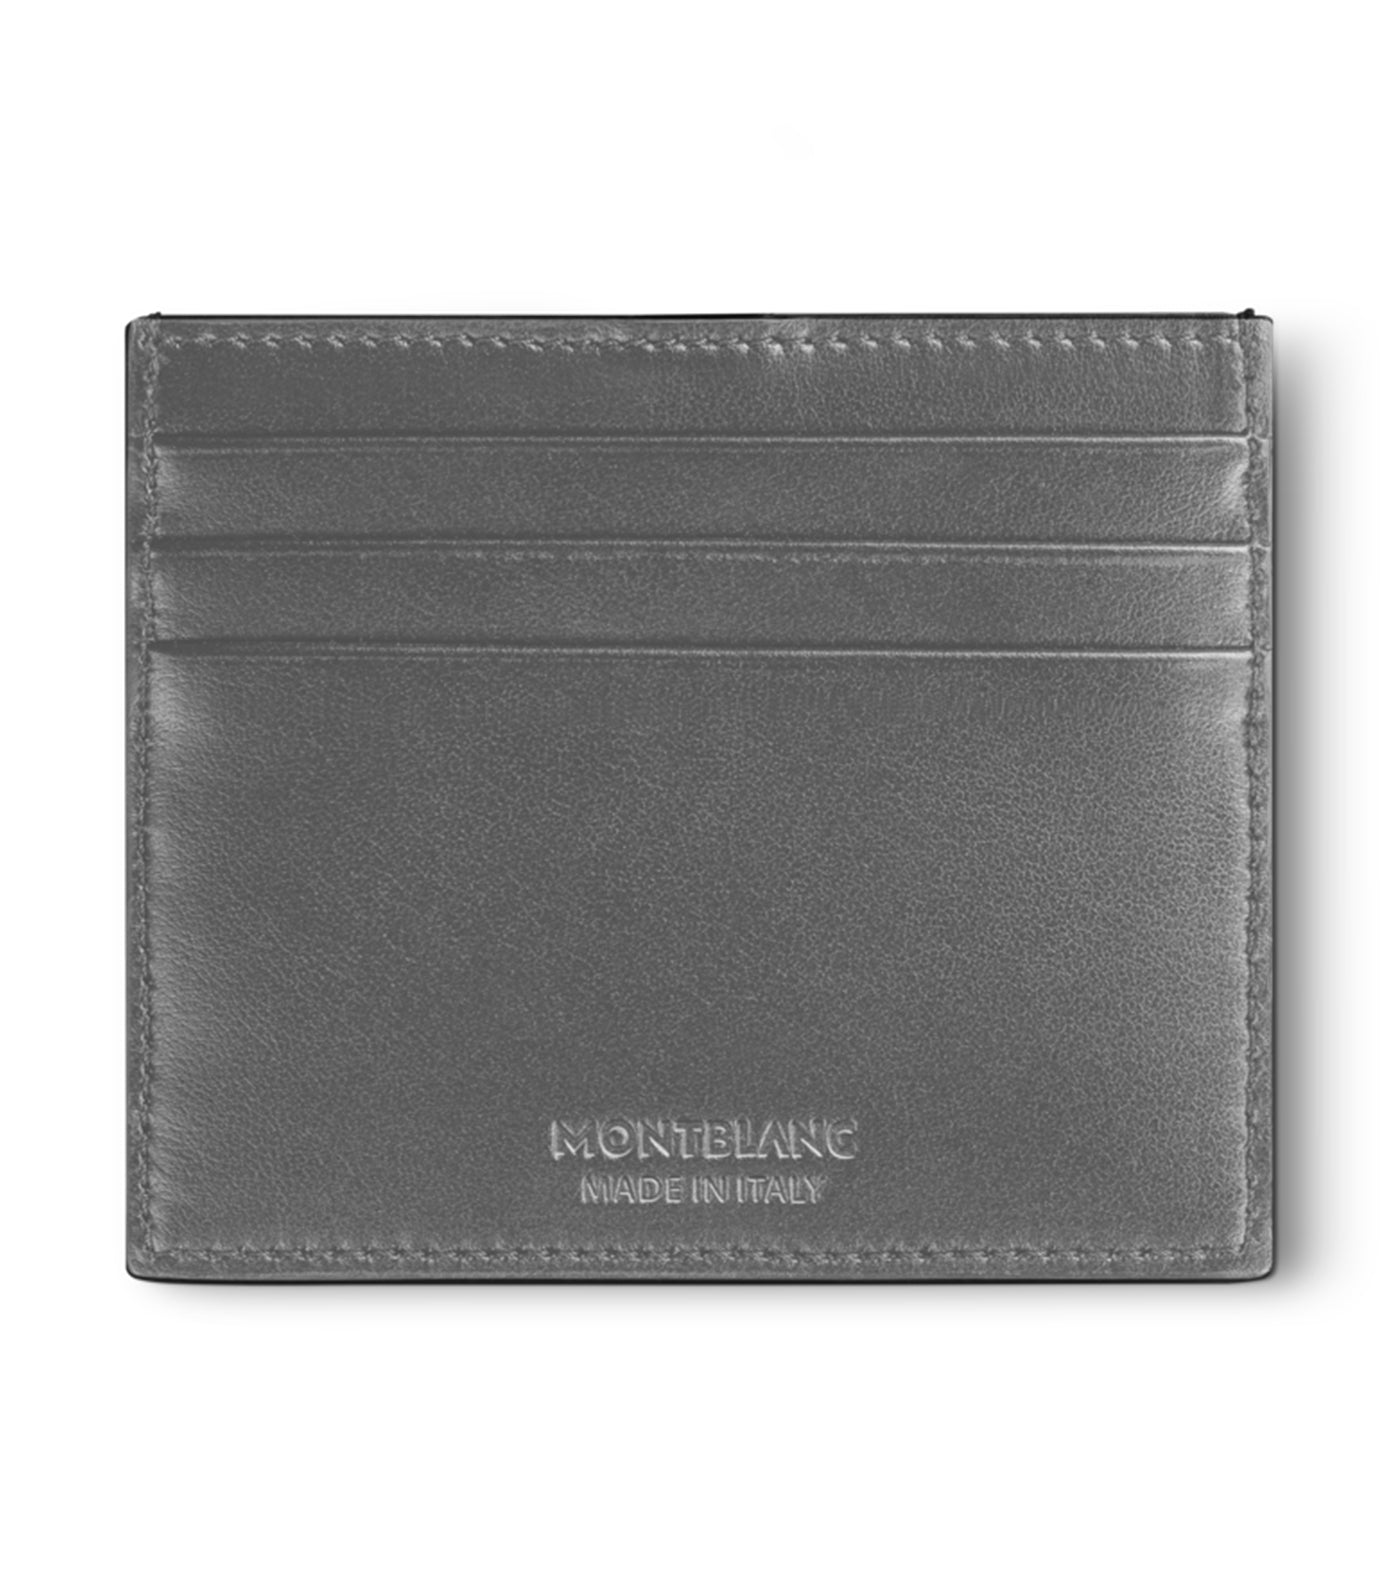 Meisterstück card holder 6cc - Luxury Card cases